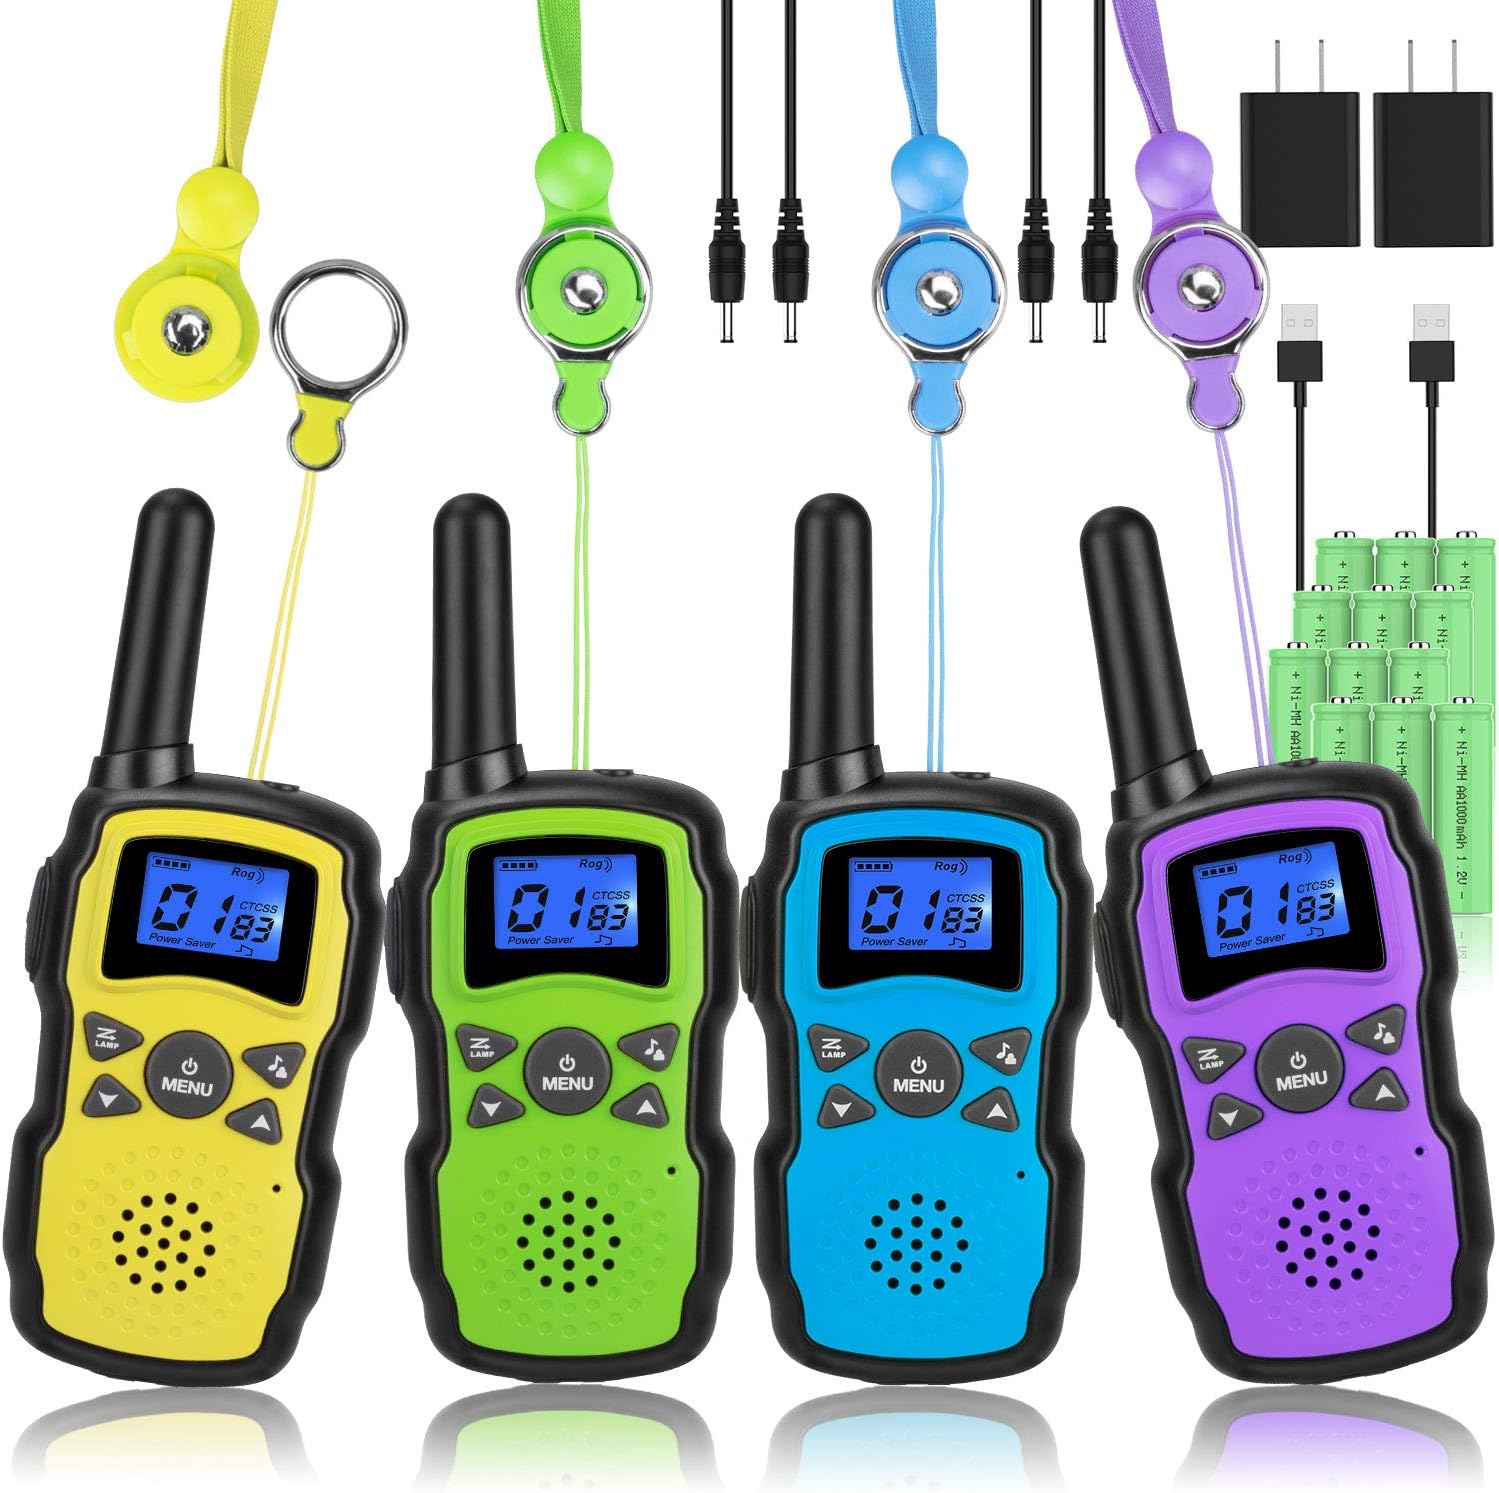 family walkie talkies comparison tables